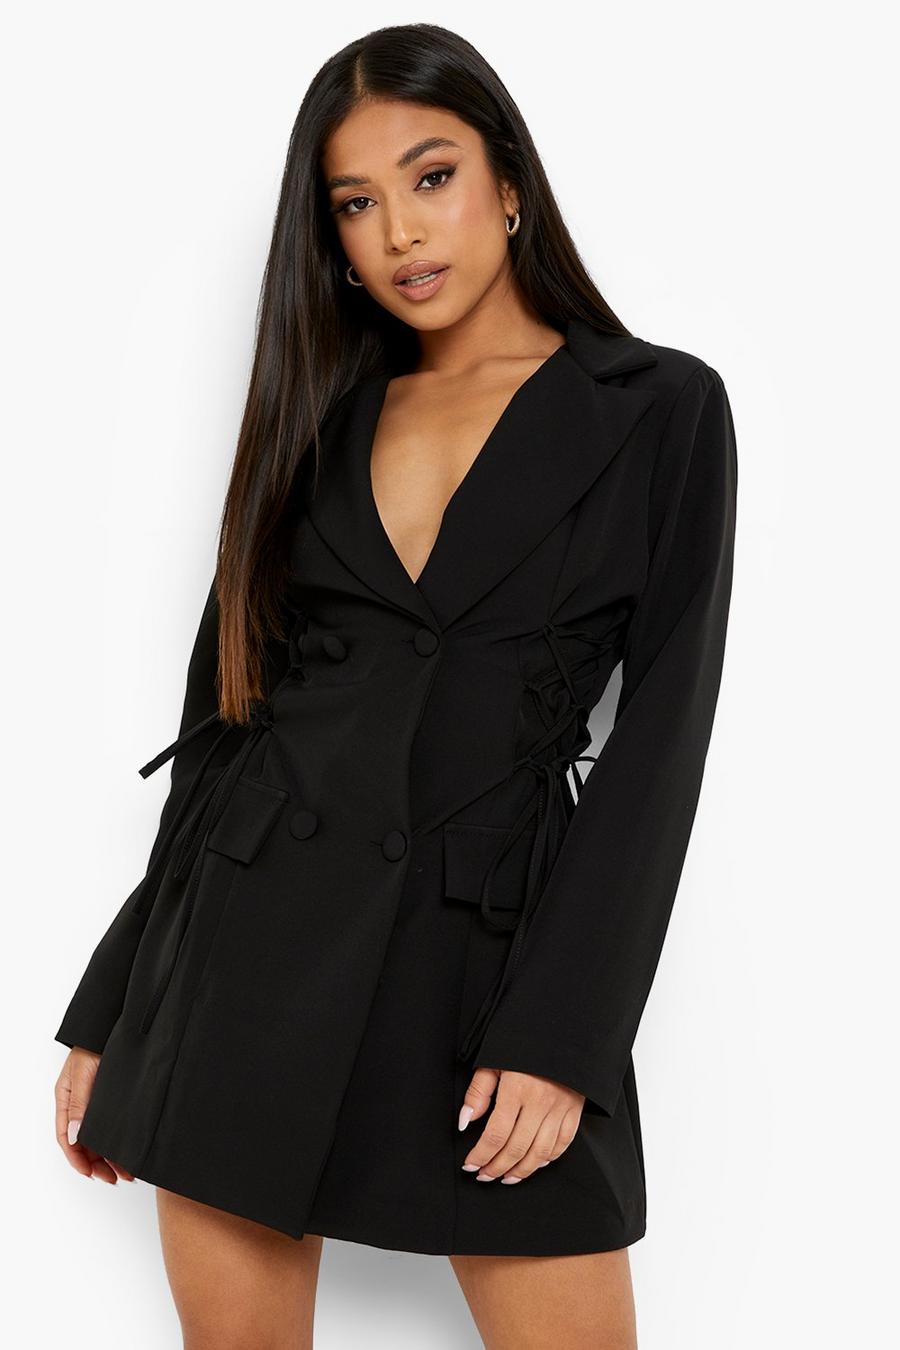 Black Petite Lace Up Detail Blazer Dress